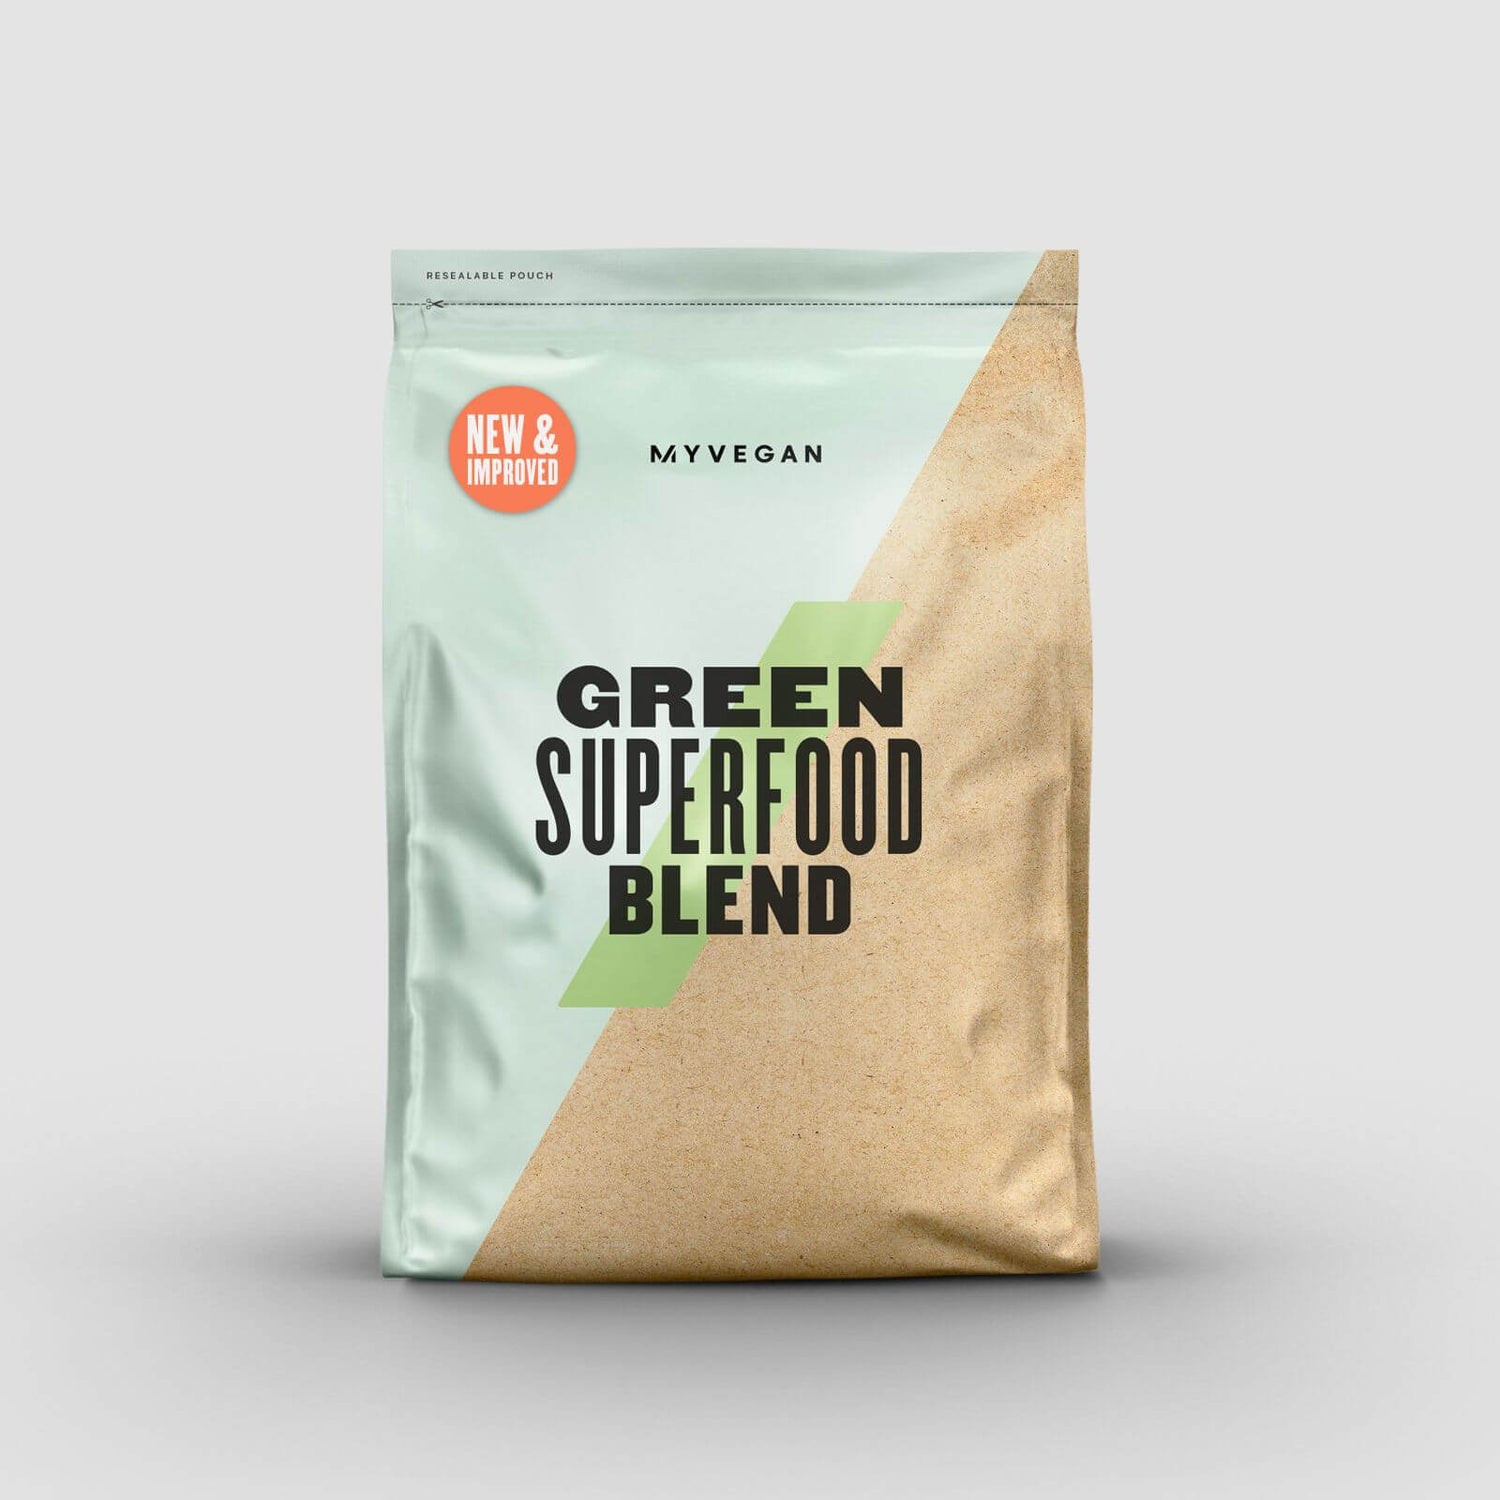 Смесь Green Superfood Blend - 250g - Натуральный вкус